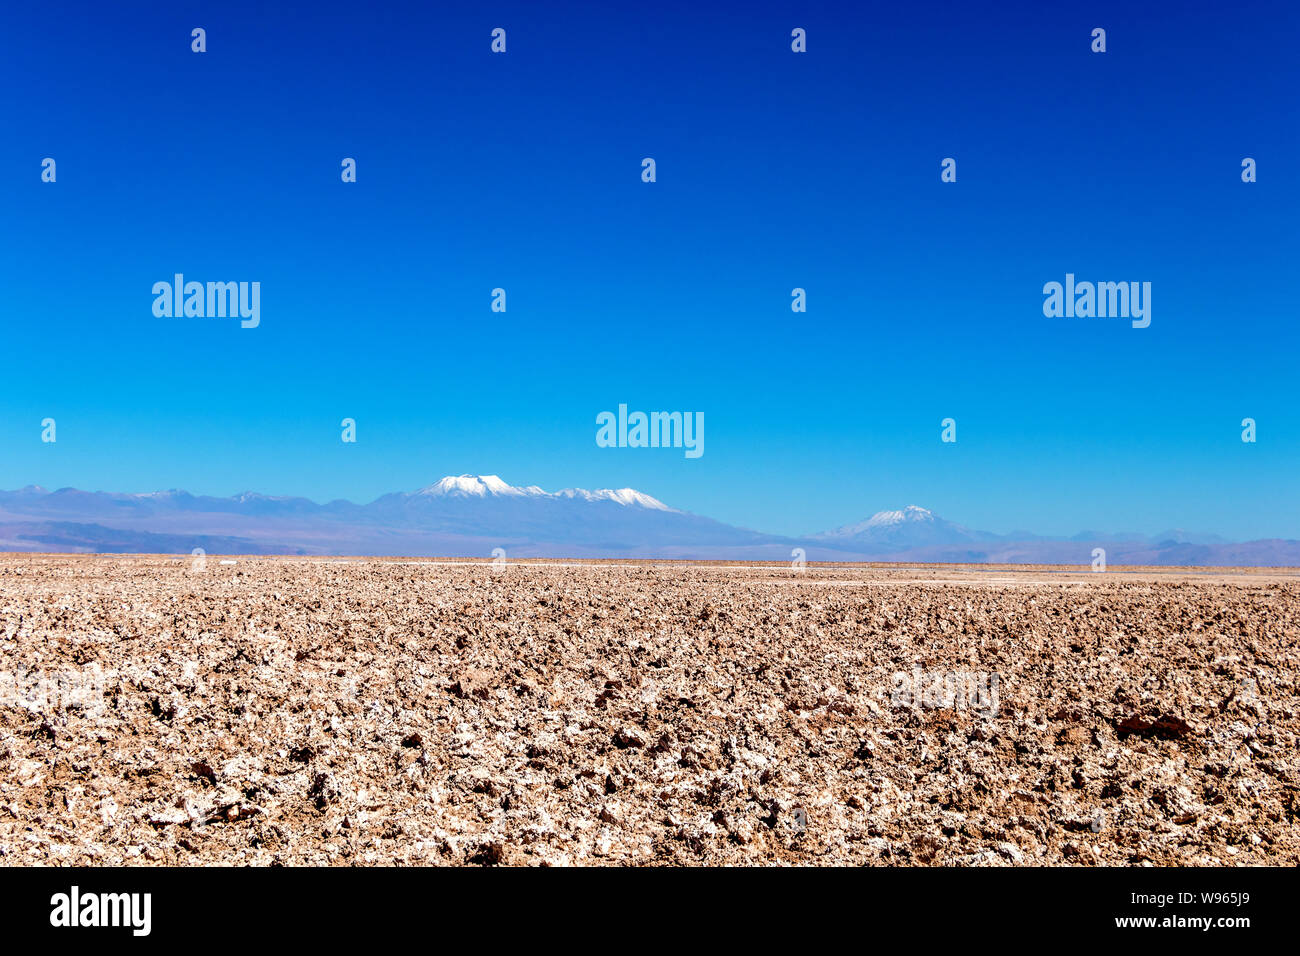 Chaxa Lake (Laguna Chaxa) with reflection of surroundings and blue sky in Salar of Atacama, Chile Stock Photo